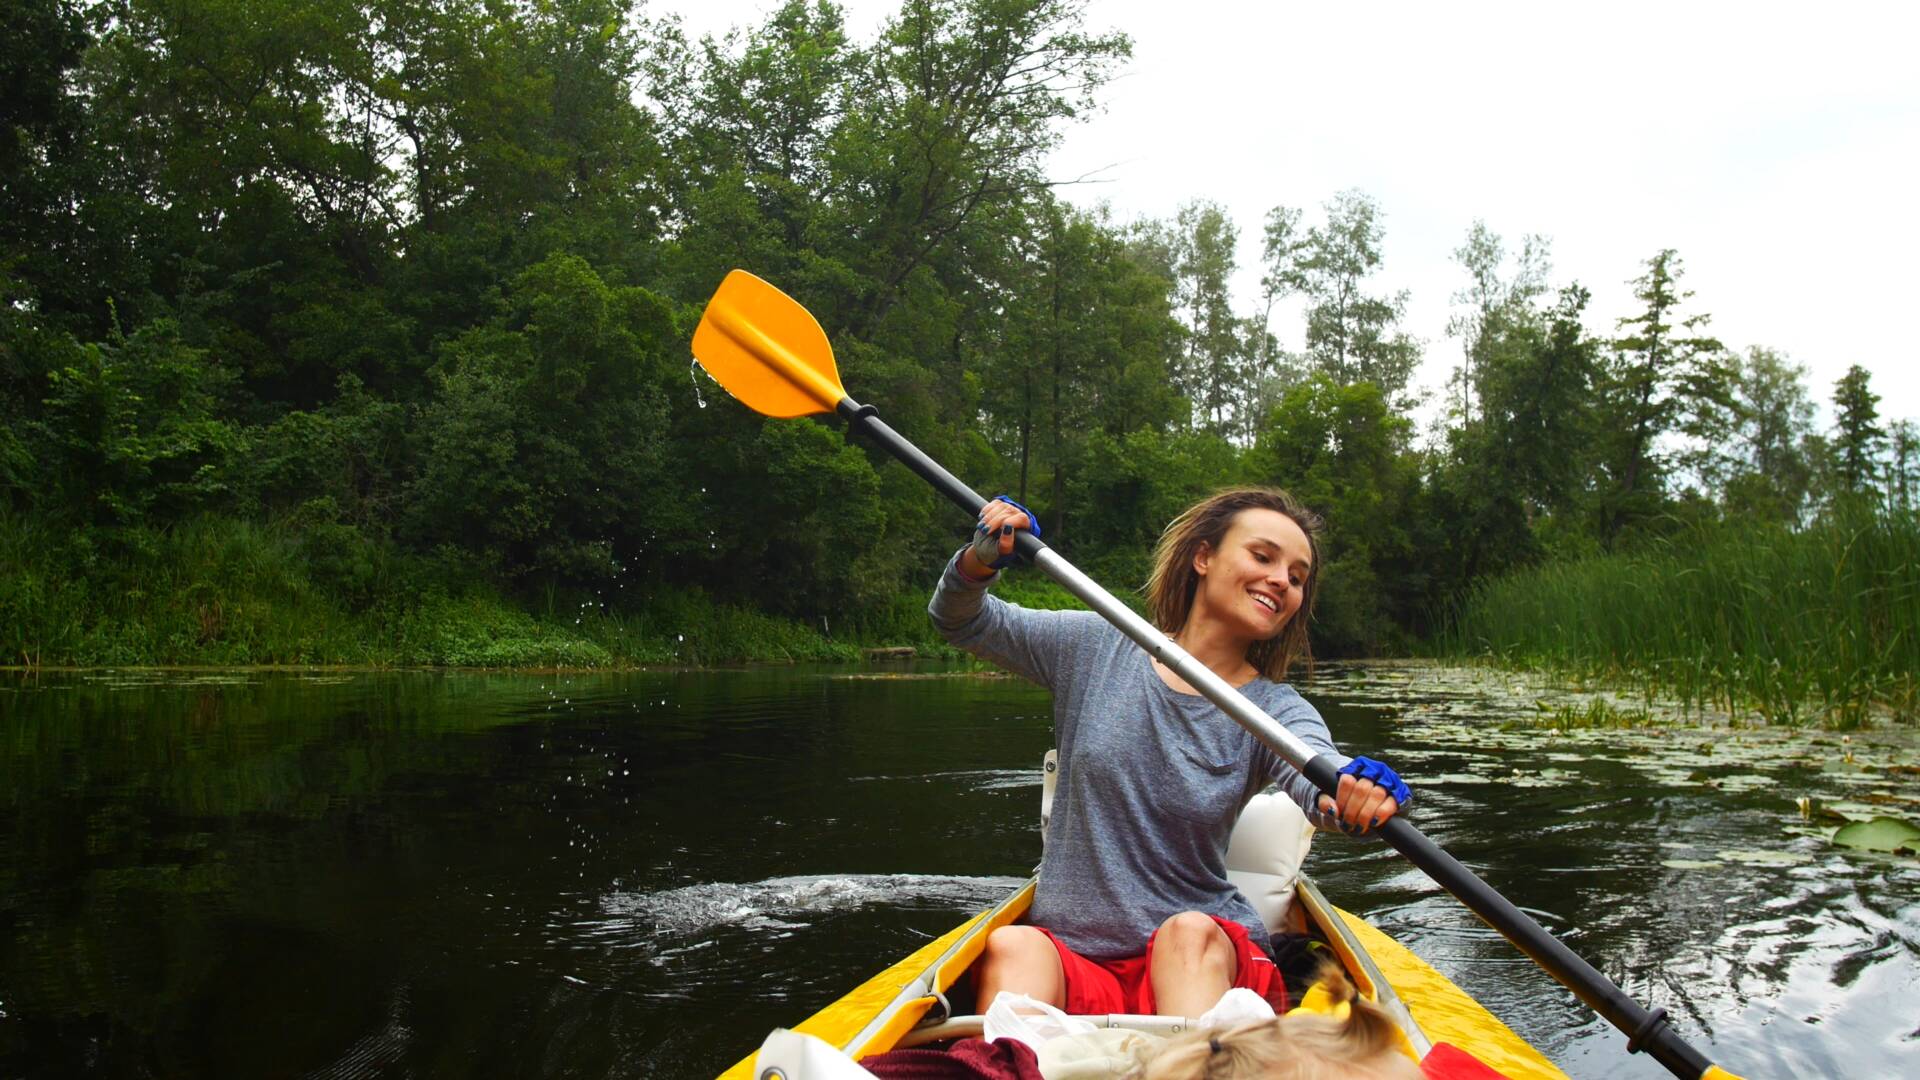 kayaking-on-the-river-2022-11-07-07-10-47-utc